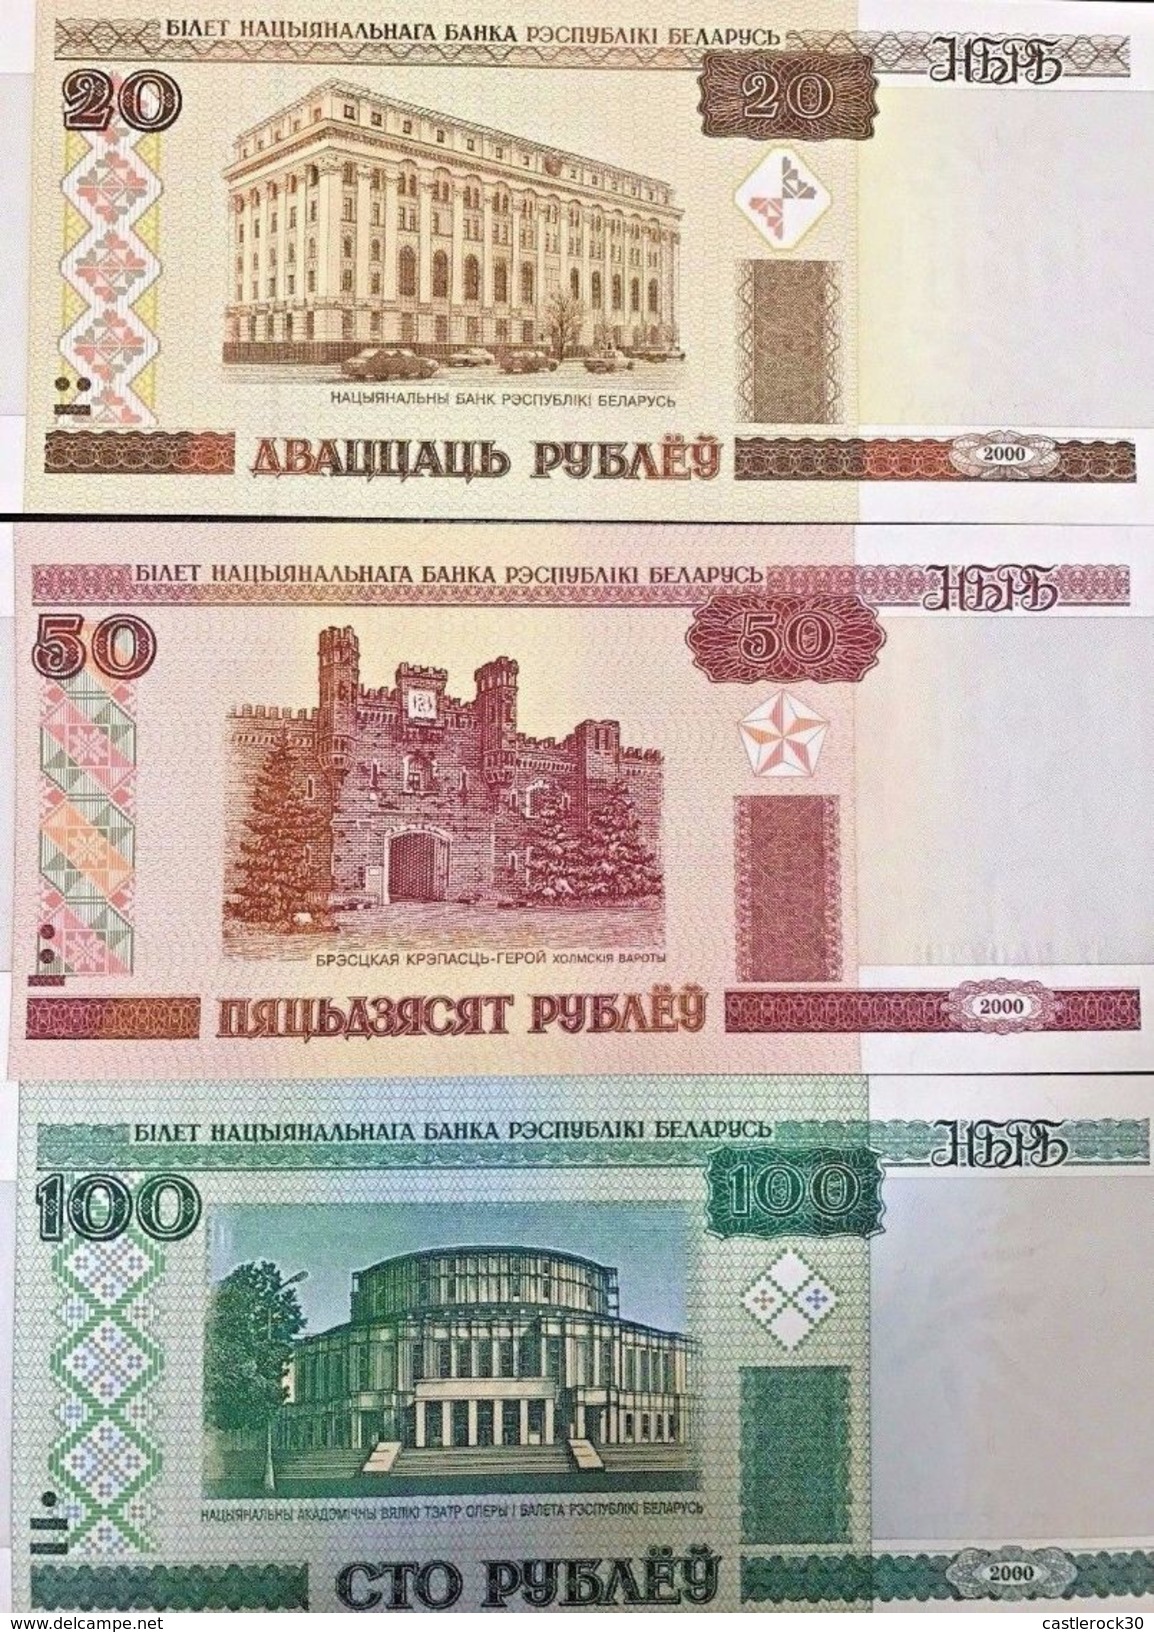 C) BELARUS BANK NOTE 20+50+100 RUBLEI ND 2000 UNCIRCULATED - Belarus